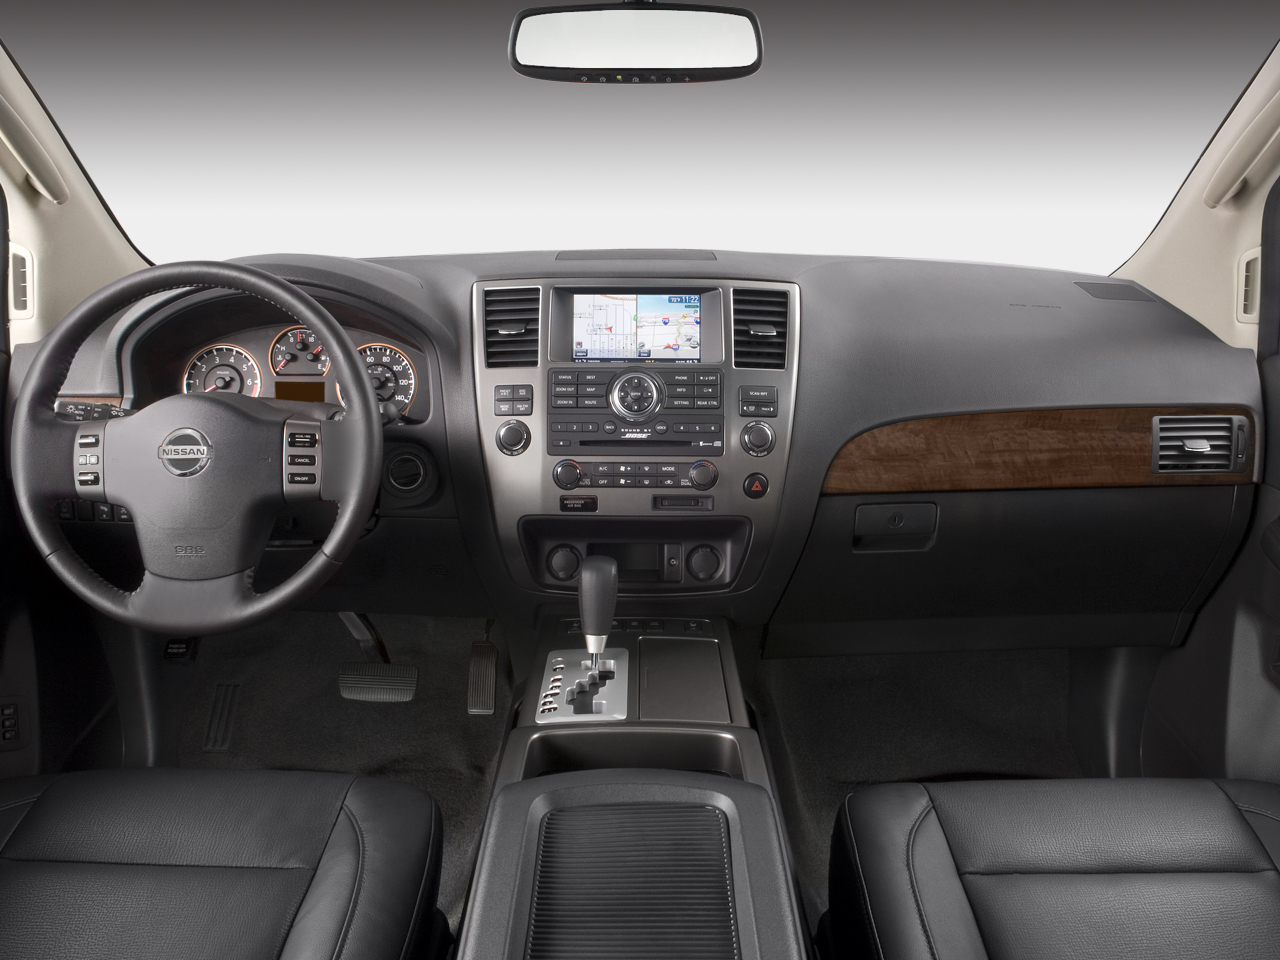 2005 Nissan Xterra Vin Check Specs Recalls Autodetective